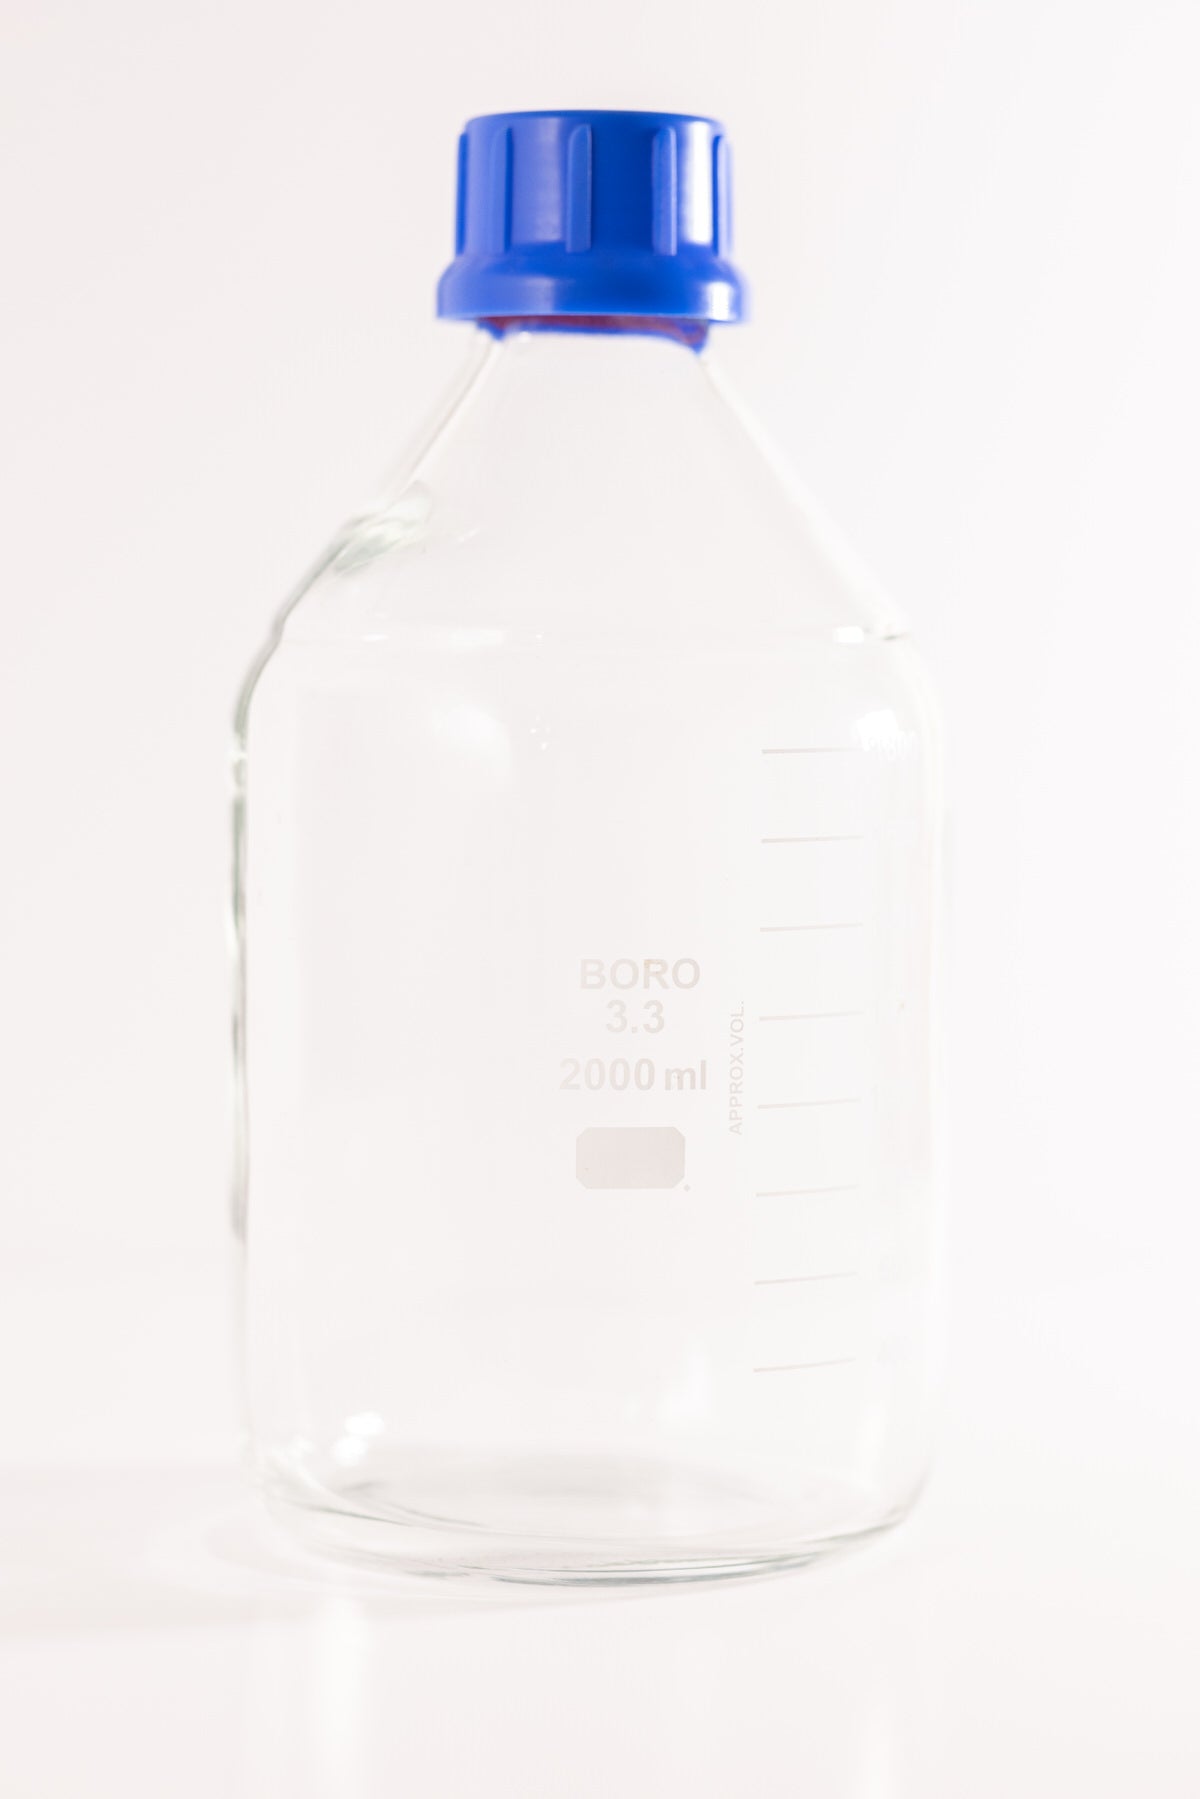 Boro 3.3 , Laboratory Bottle 2000ml with GL45 Screw Cap Air Tight Seal